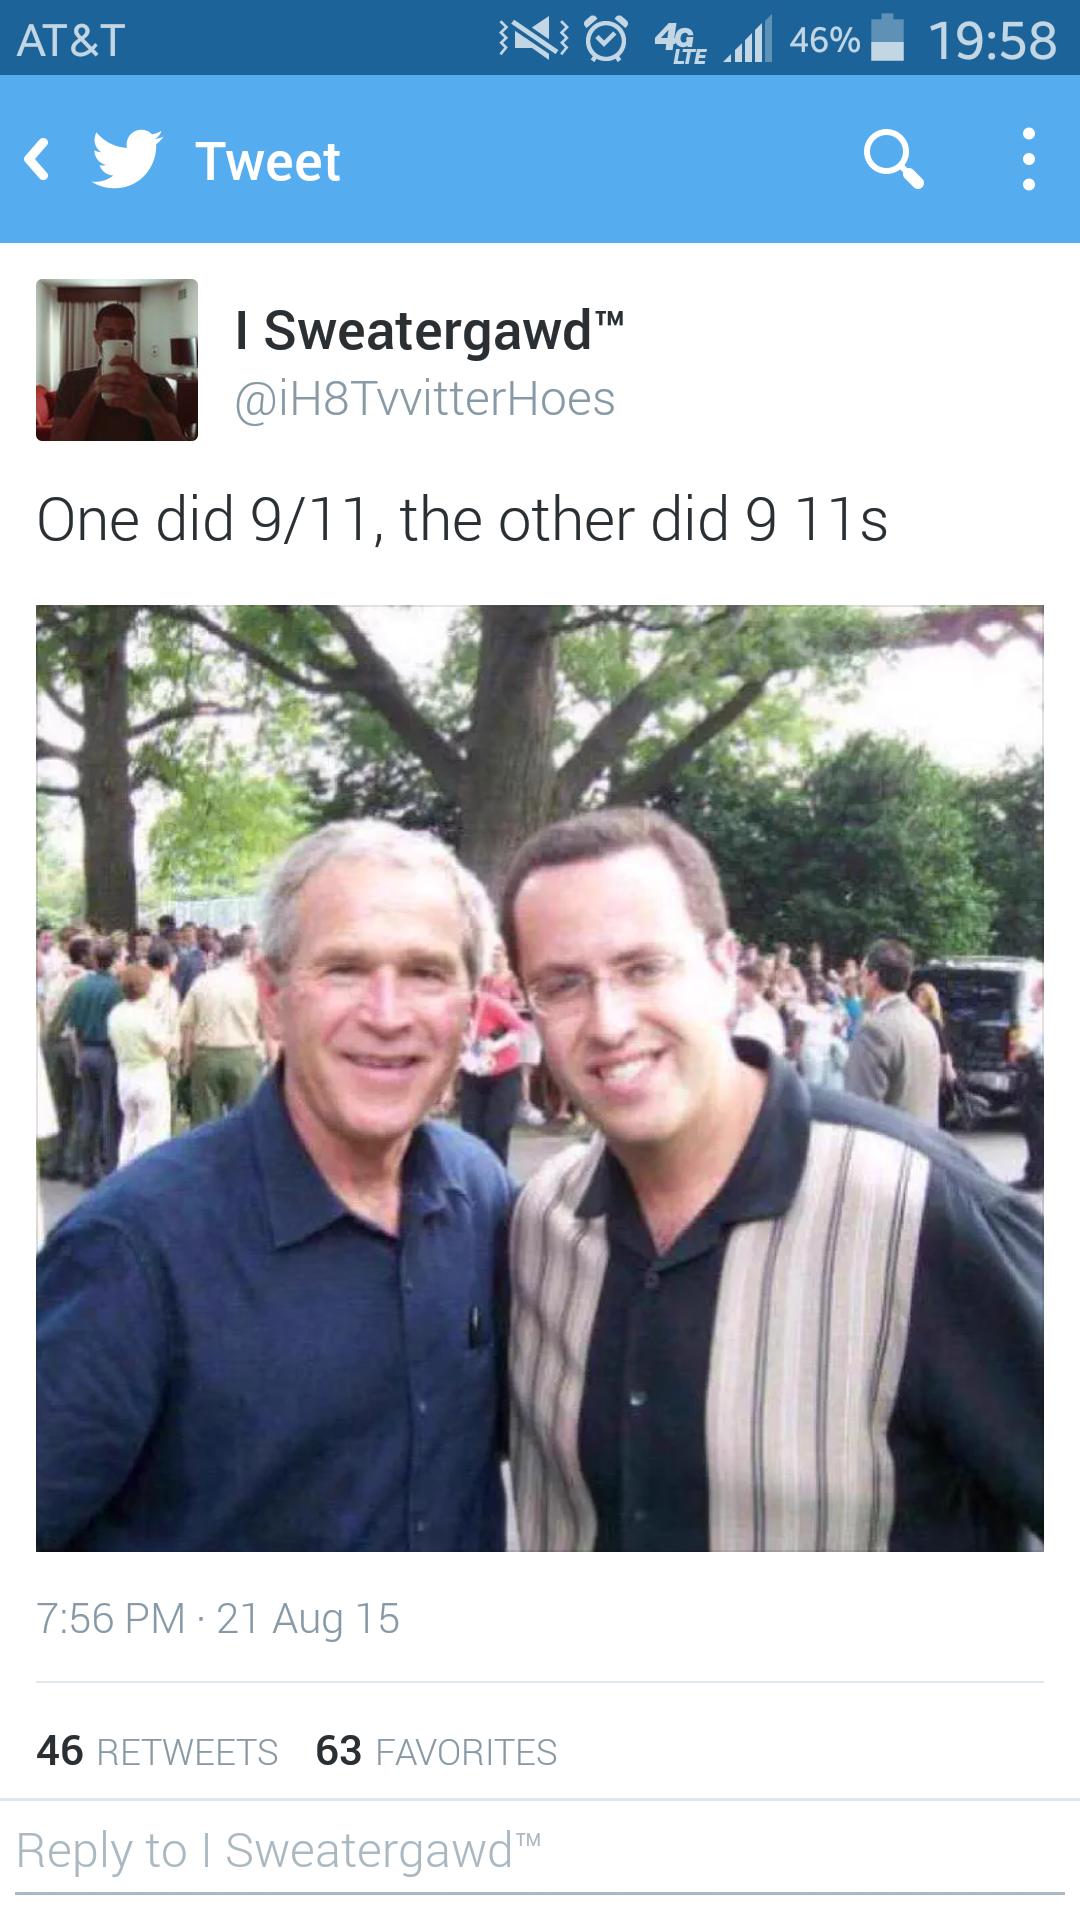 George Bush and Jared Fogle